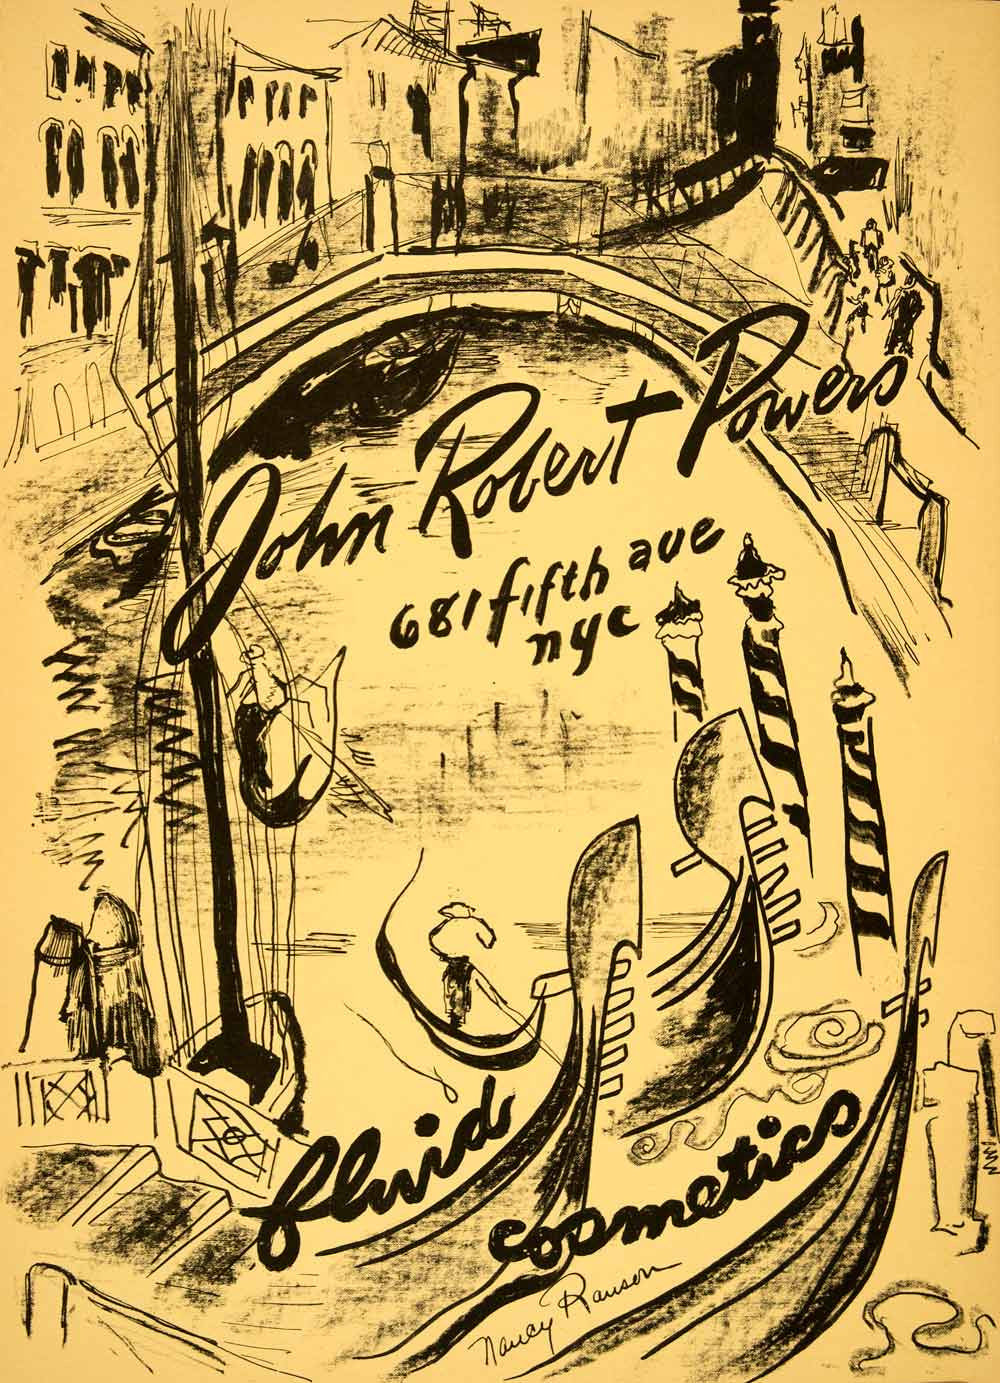 1953 Lithograph Nancy Ranson John Robert Powers Cosmetics 681 Fifth Ave AEFA1 - Period Paper
